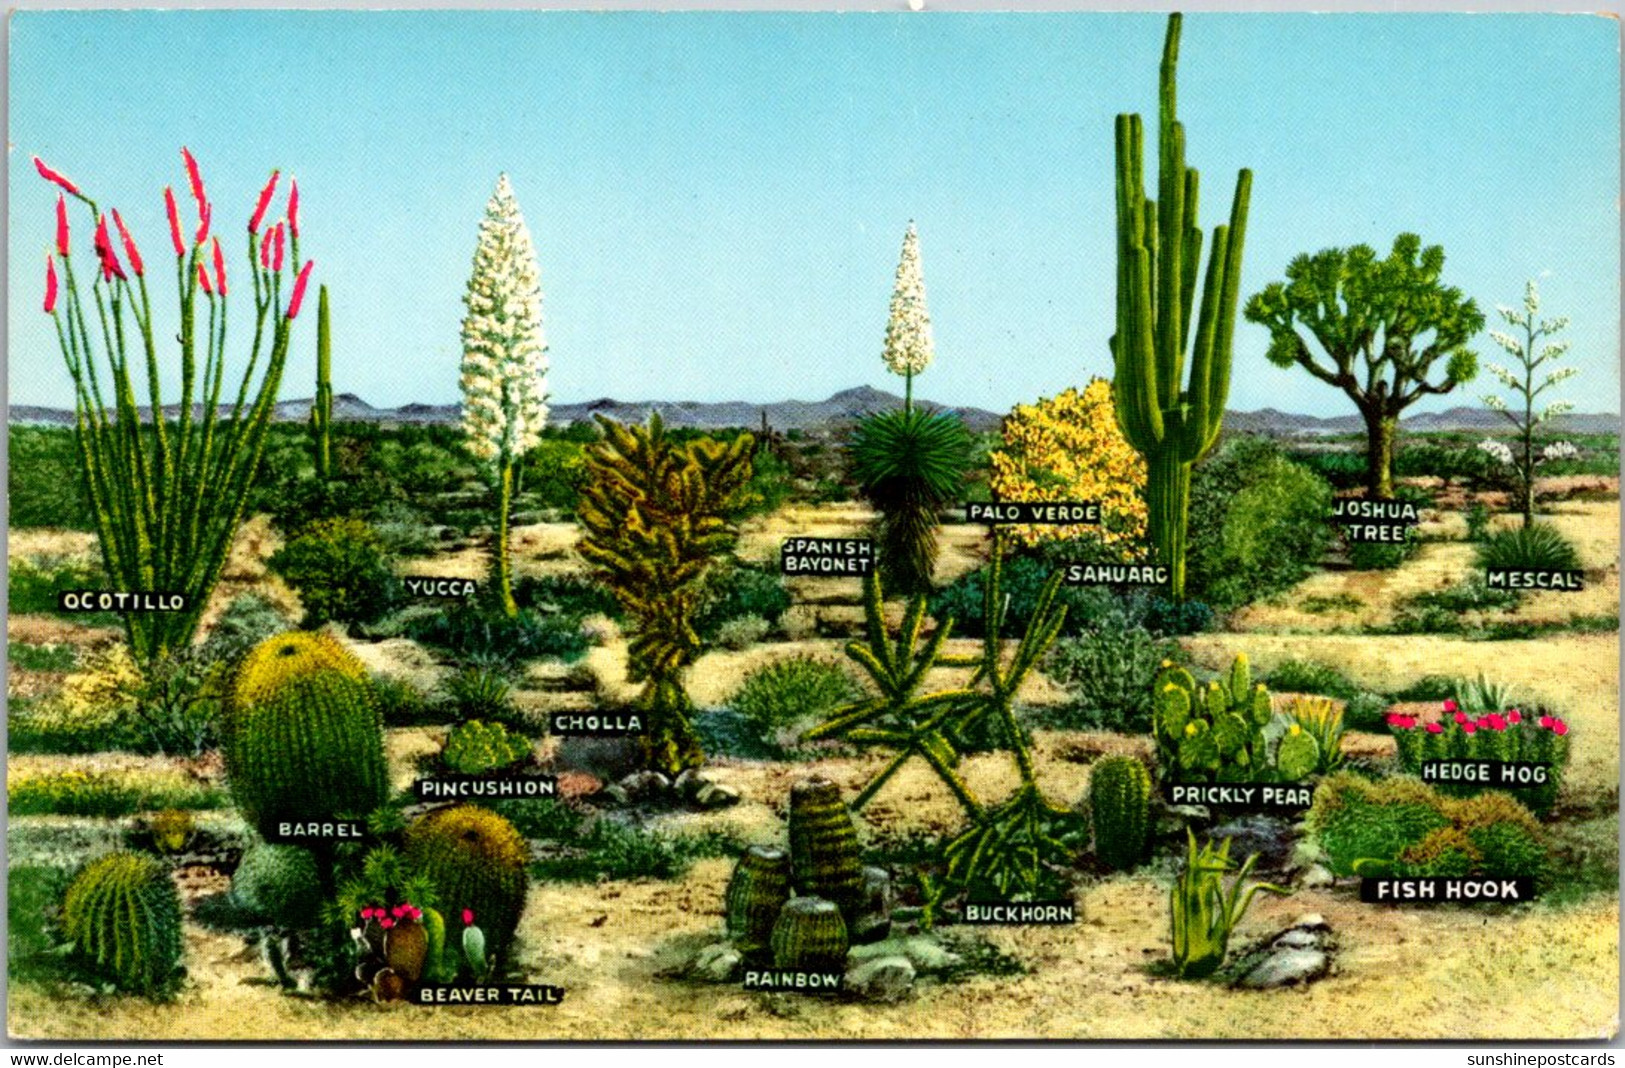 Cactus A Few Varieties Of Desert Vegetation - Cactusses